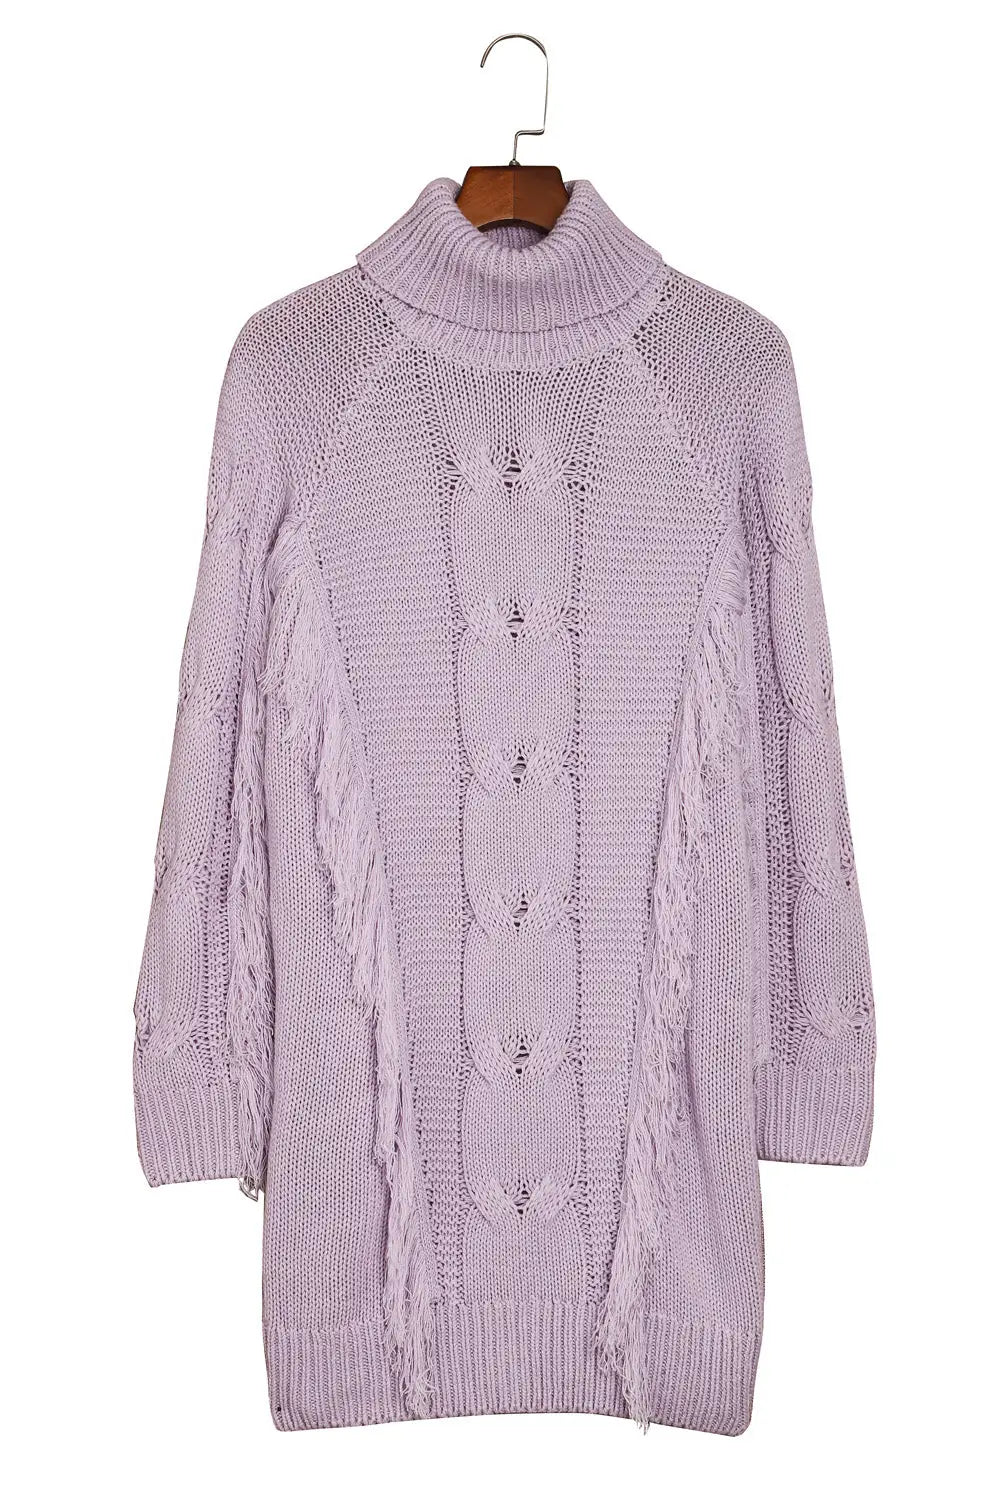 Purple twist fringe casual high neck sweater dress - dresses